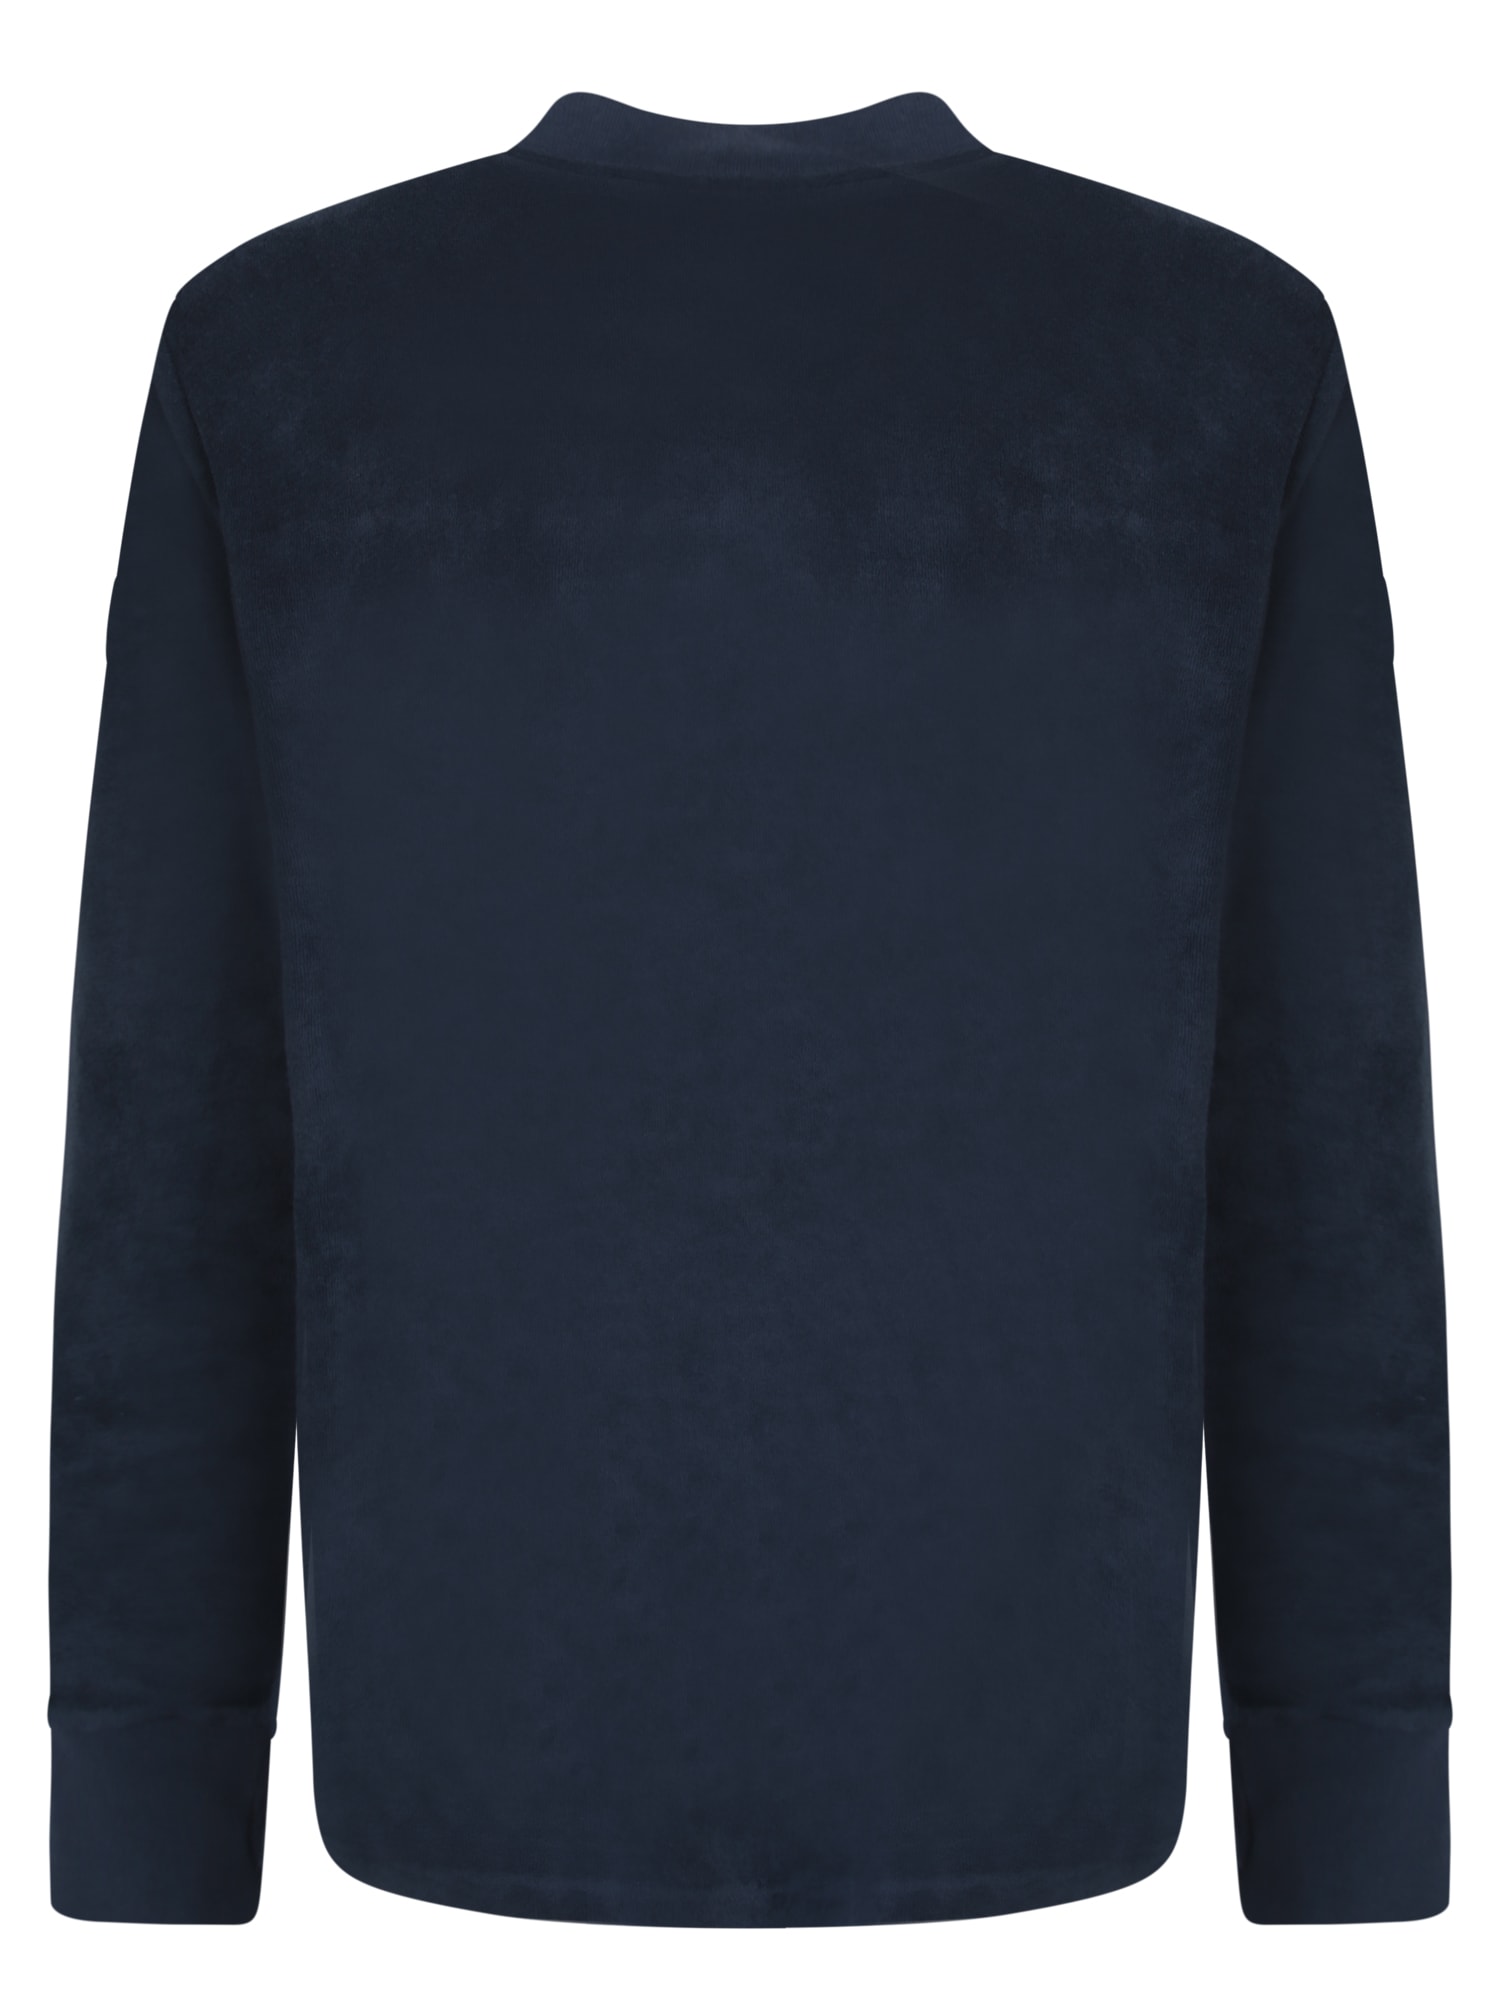 Shop Moncler Logo University Blue Sweatshirt